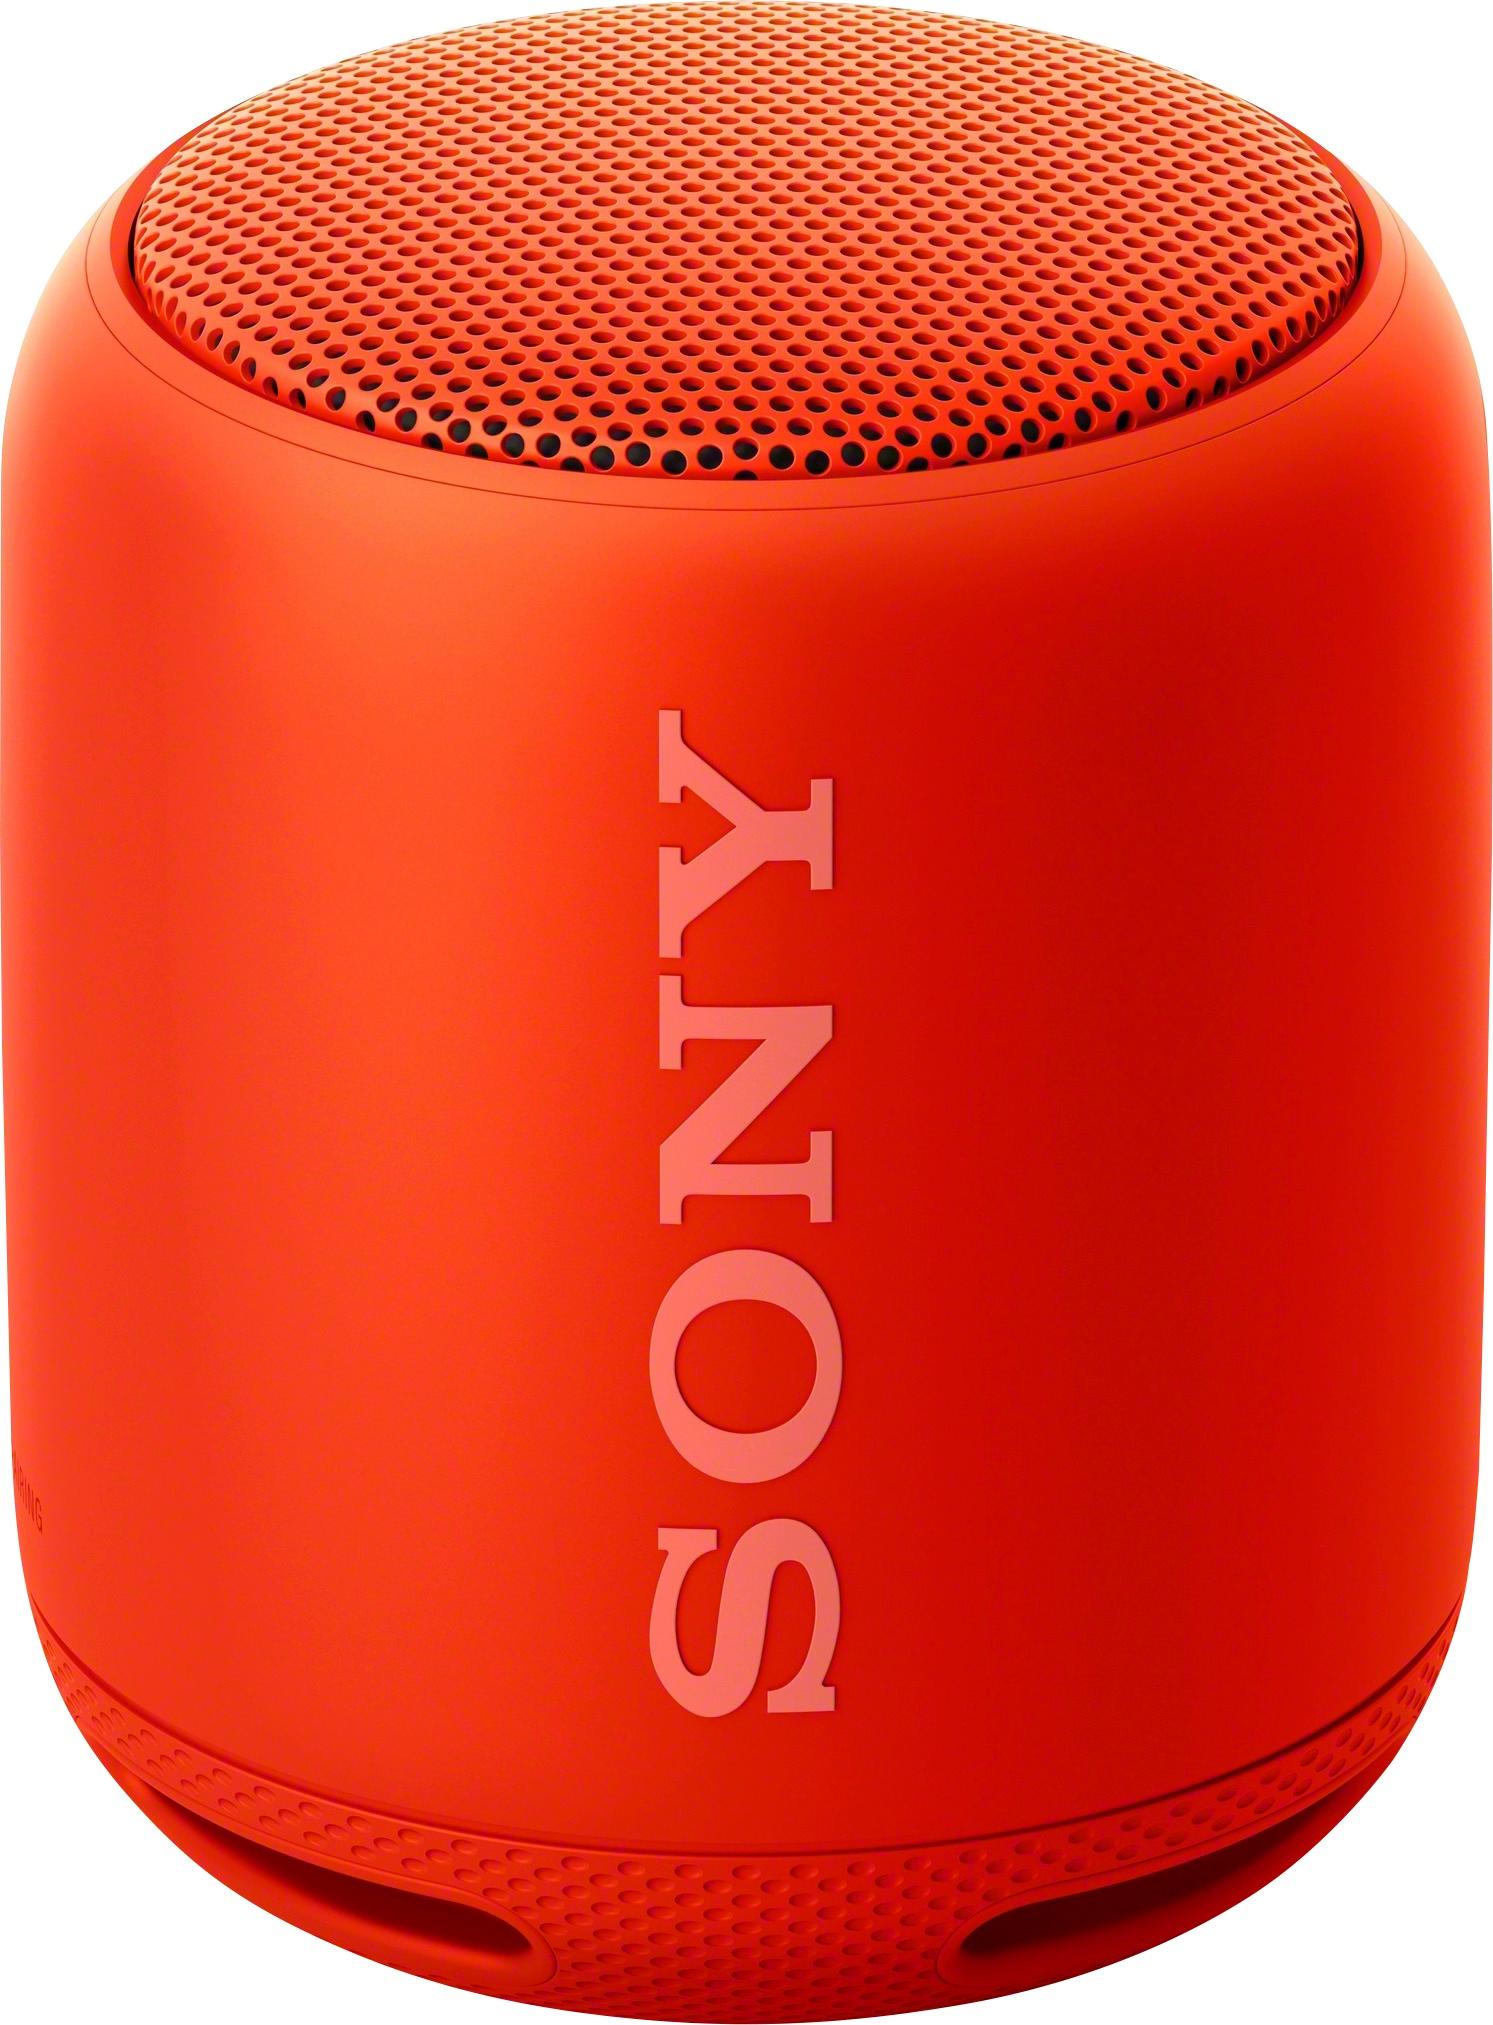 sony bluetooth speaker red